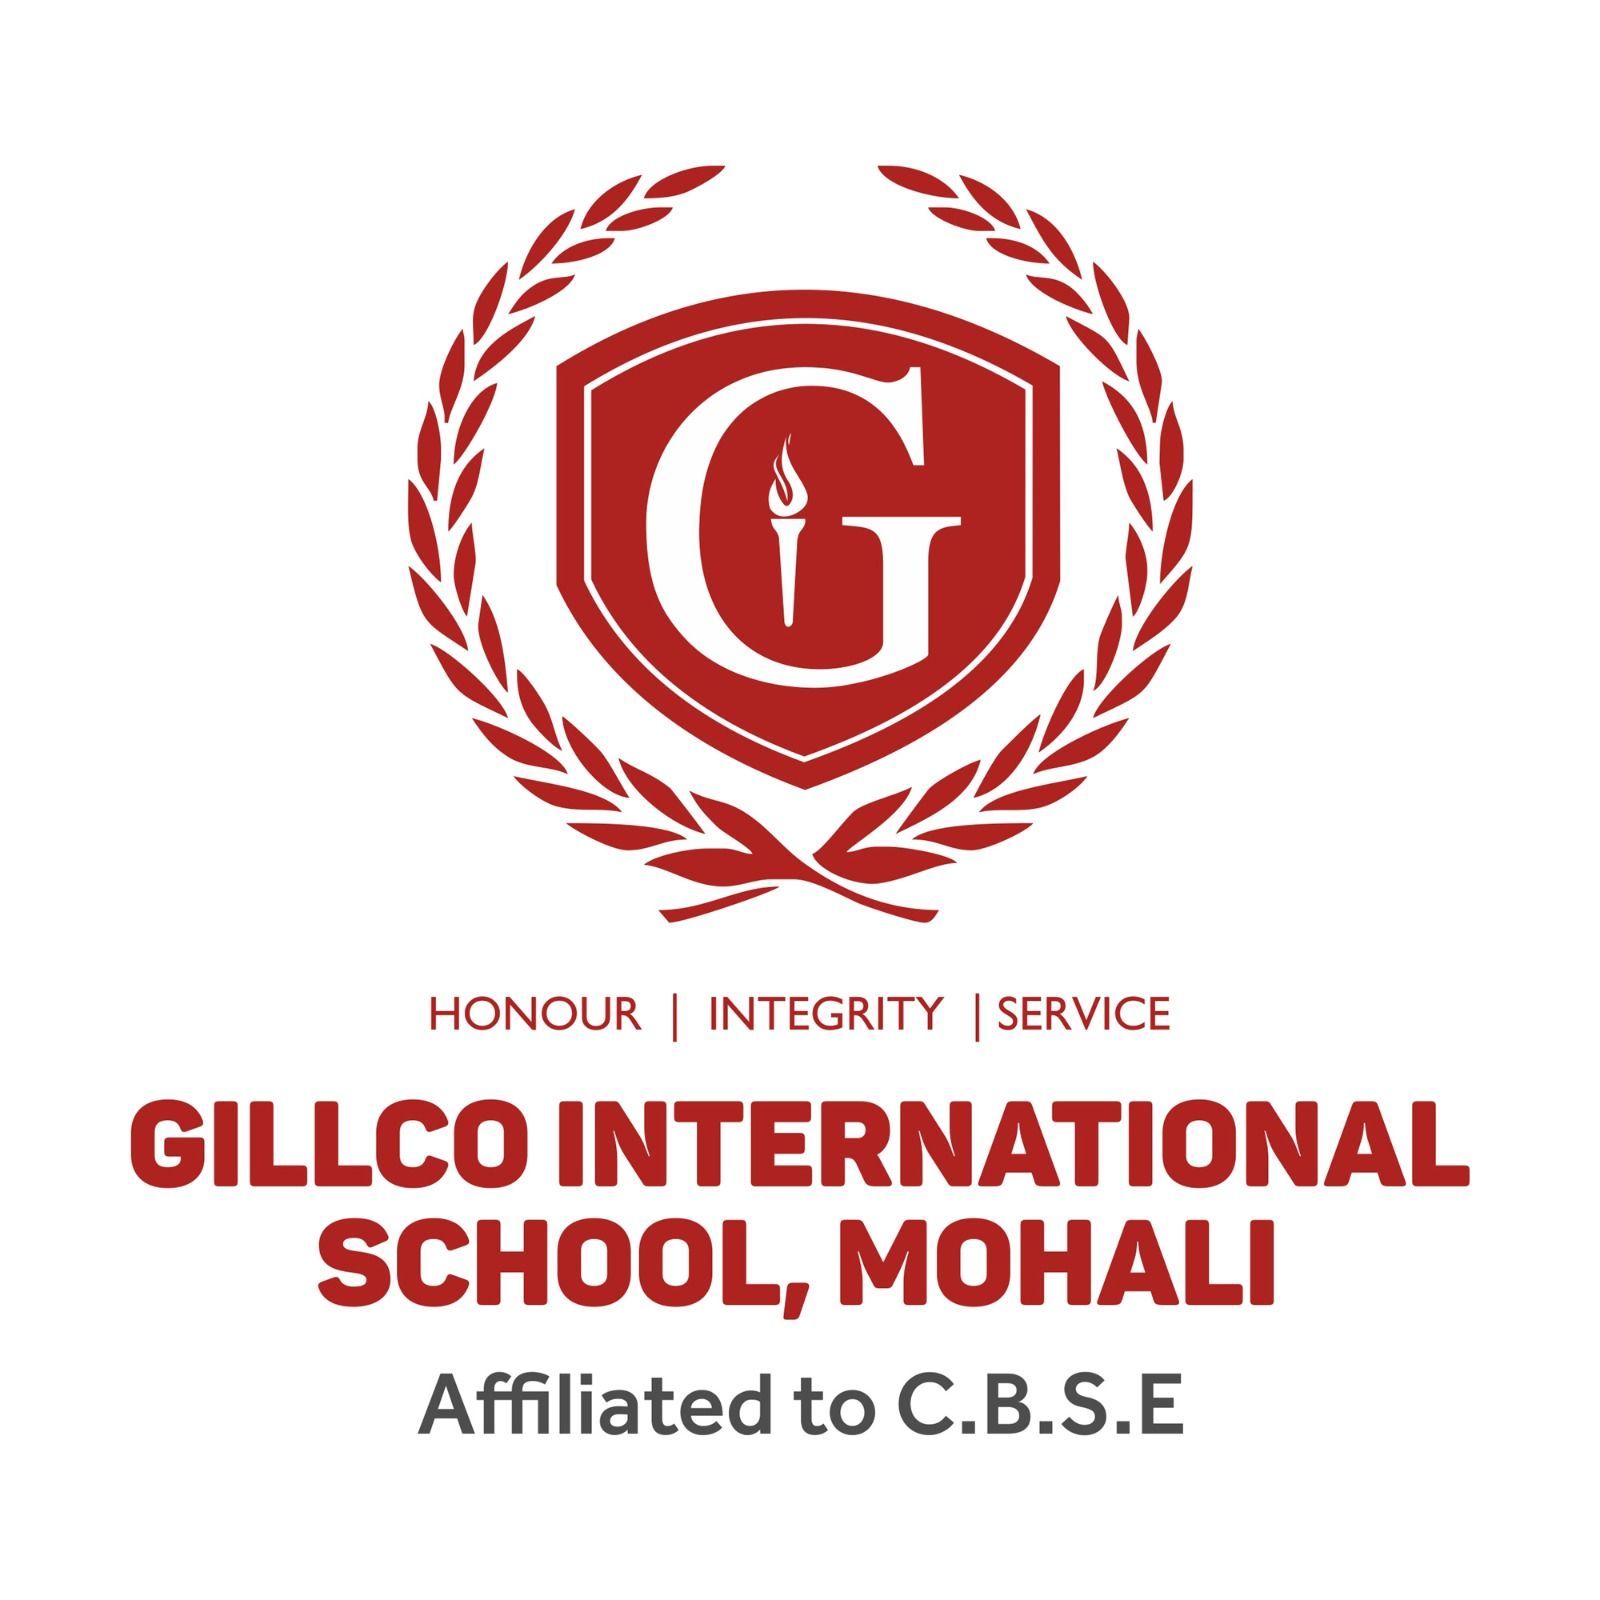 GILLCO INTERNATIONAL SCHOOL